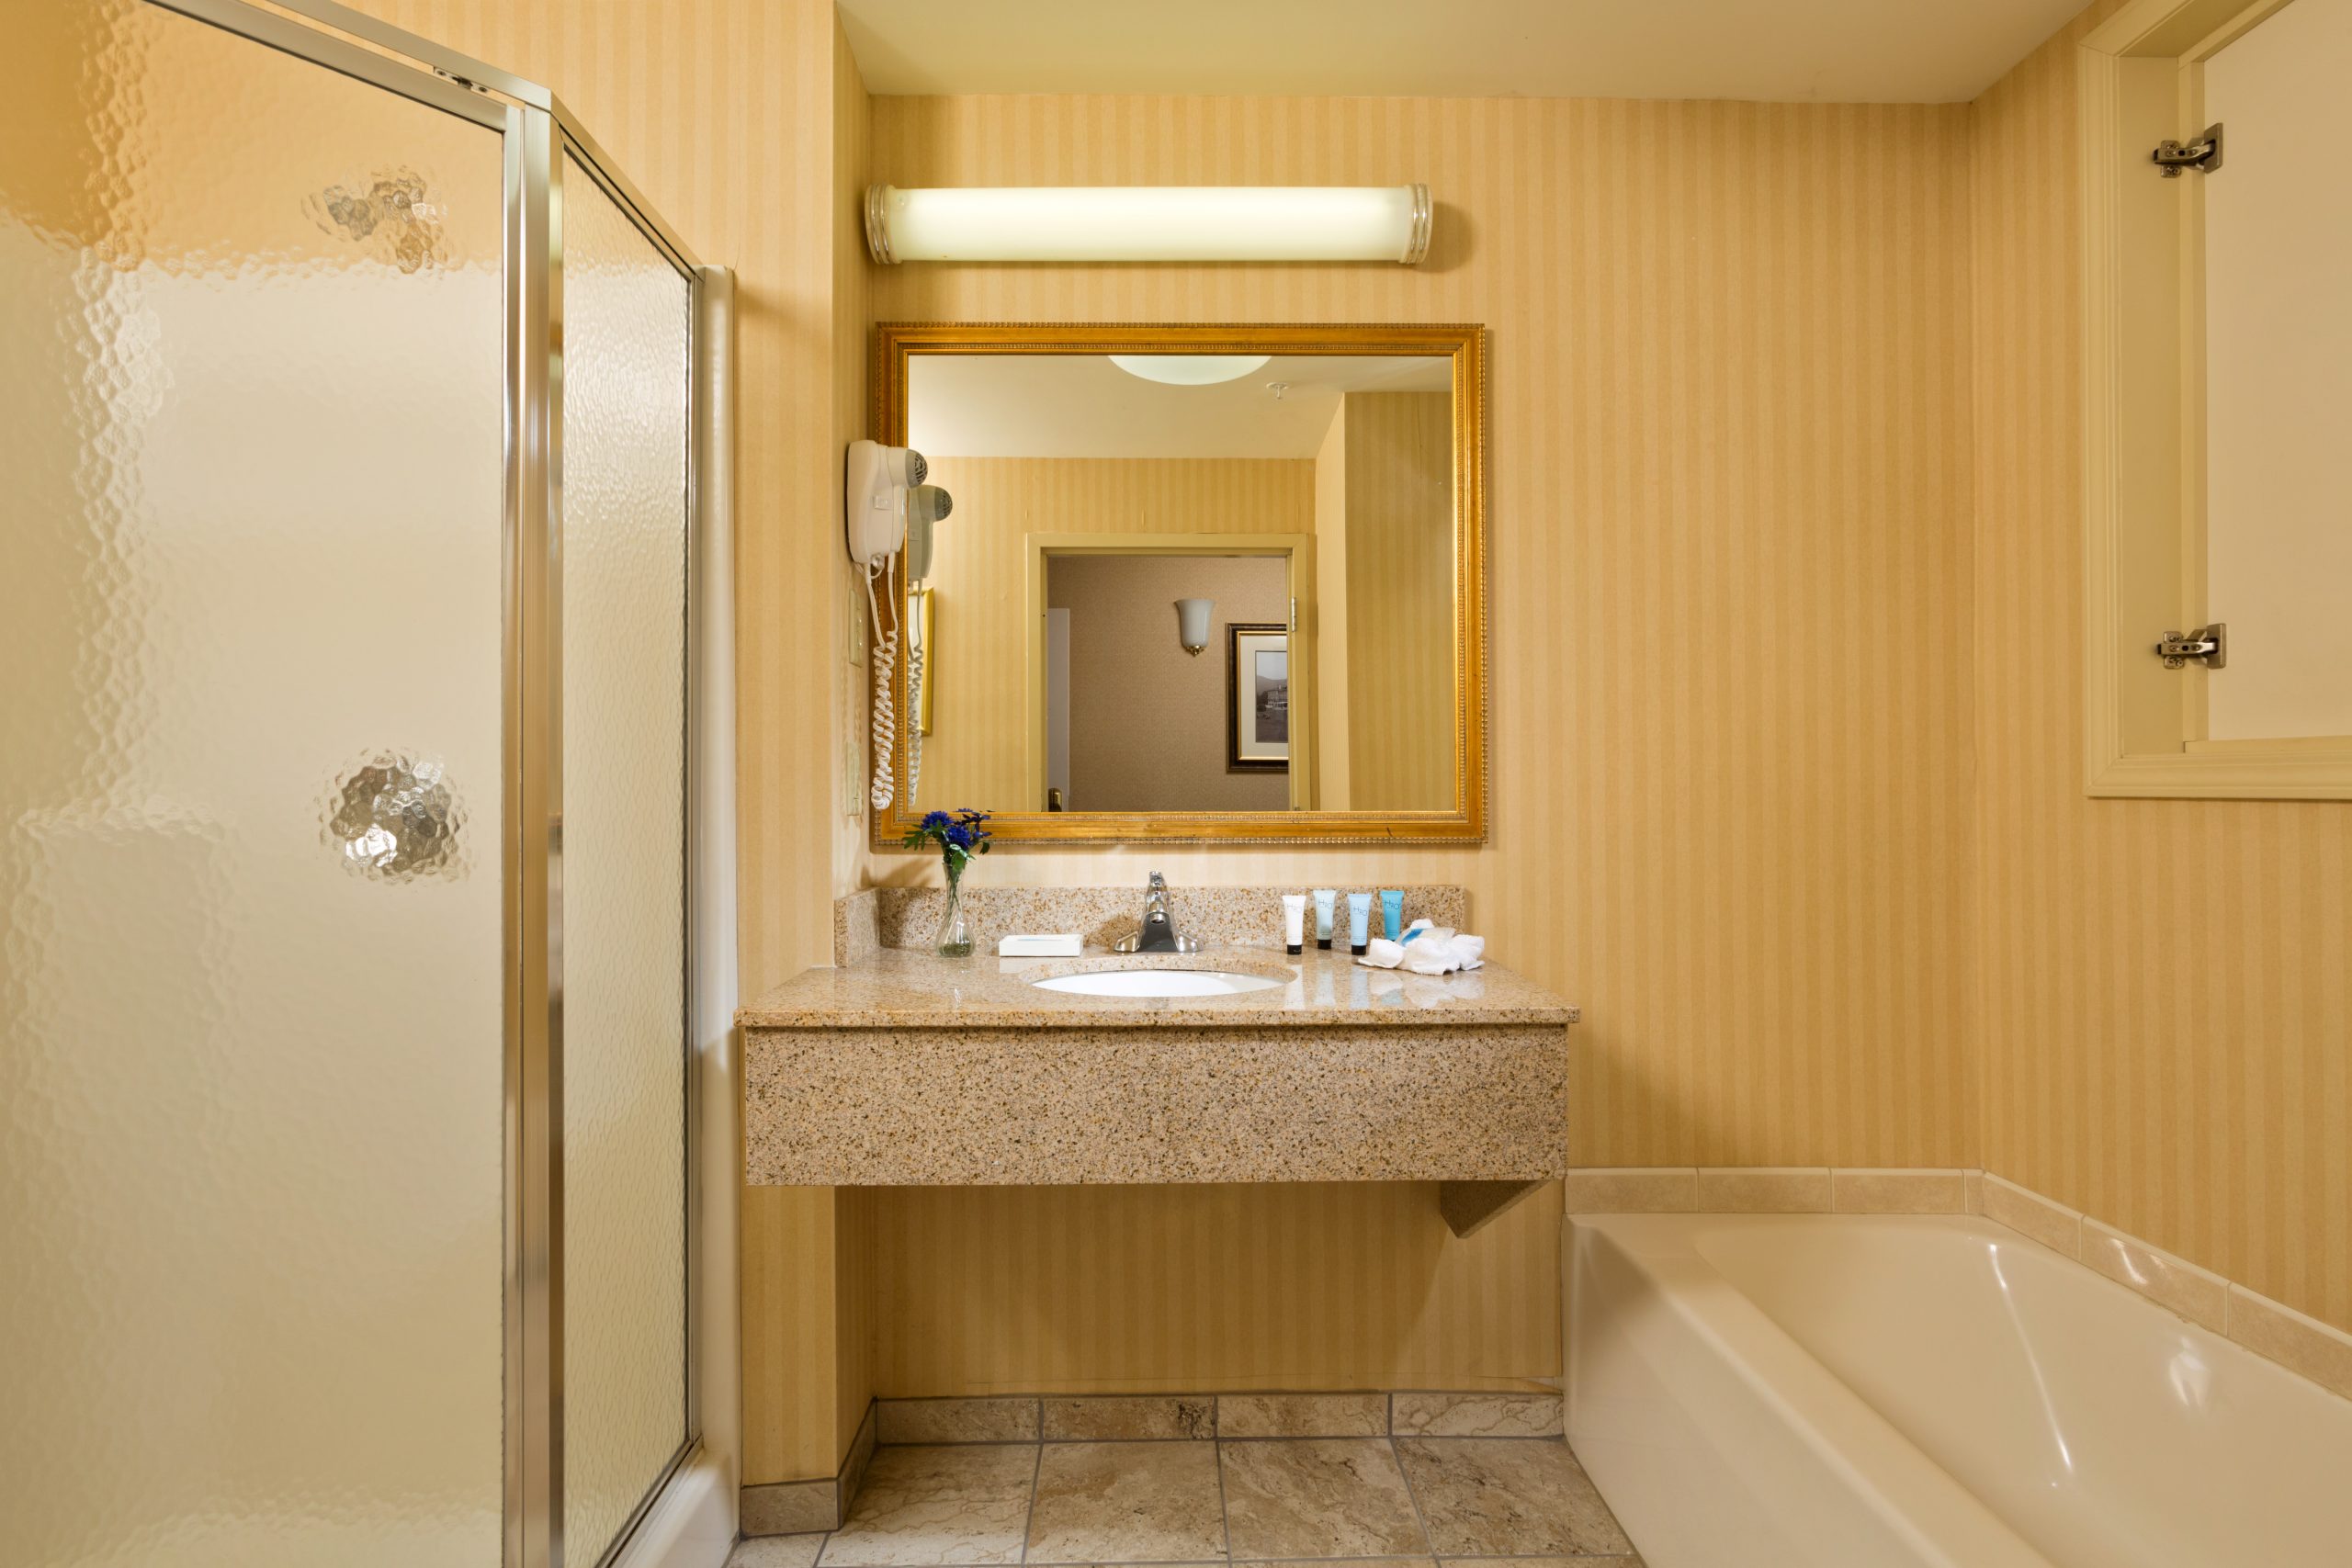 Grand Hotel Bathroom with bathtub and shower